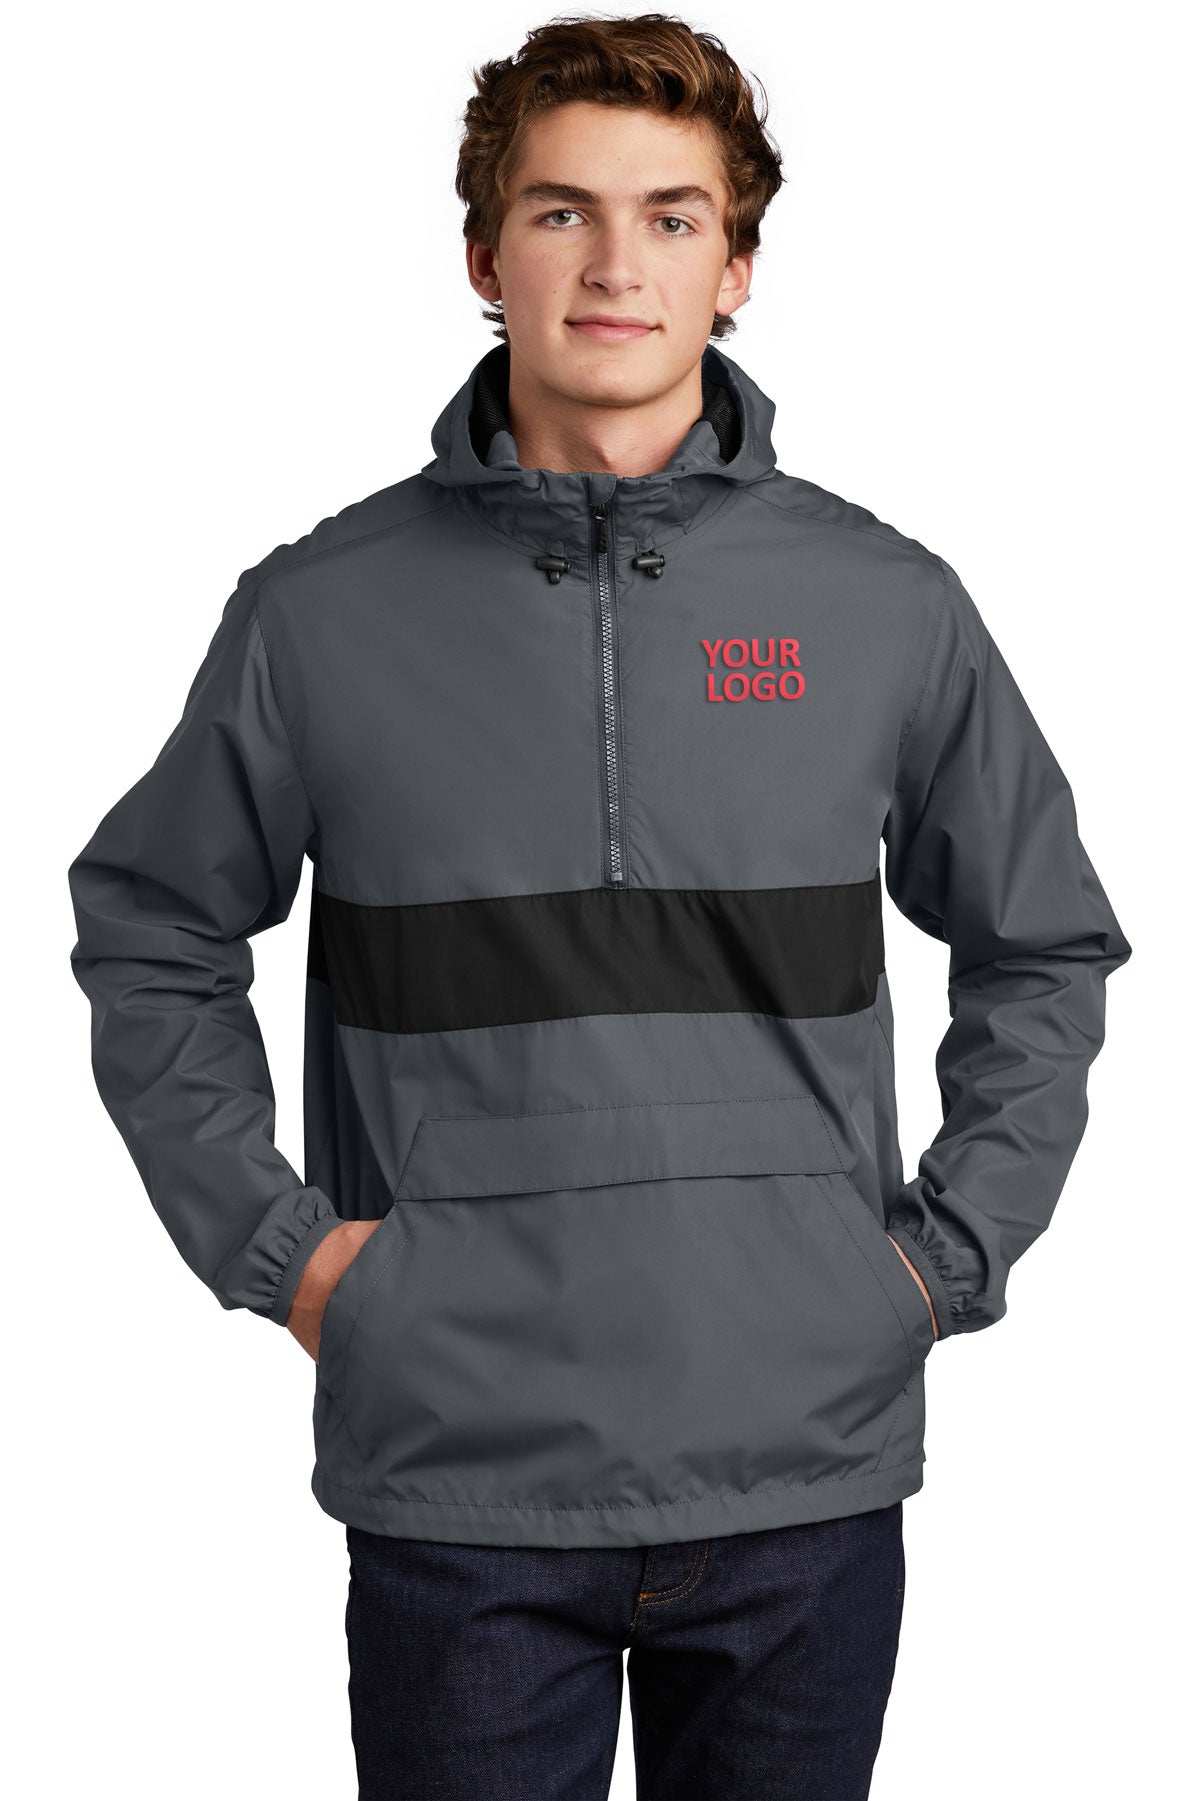 Sport-Tek Graphite Grey/ Black JST65 jacket company logo